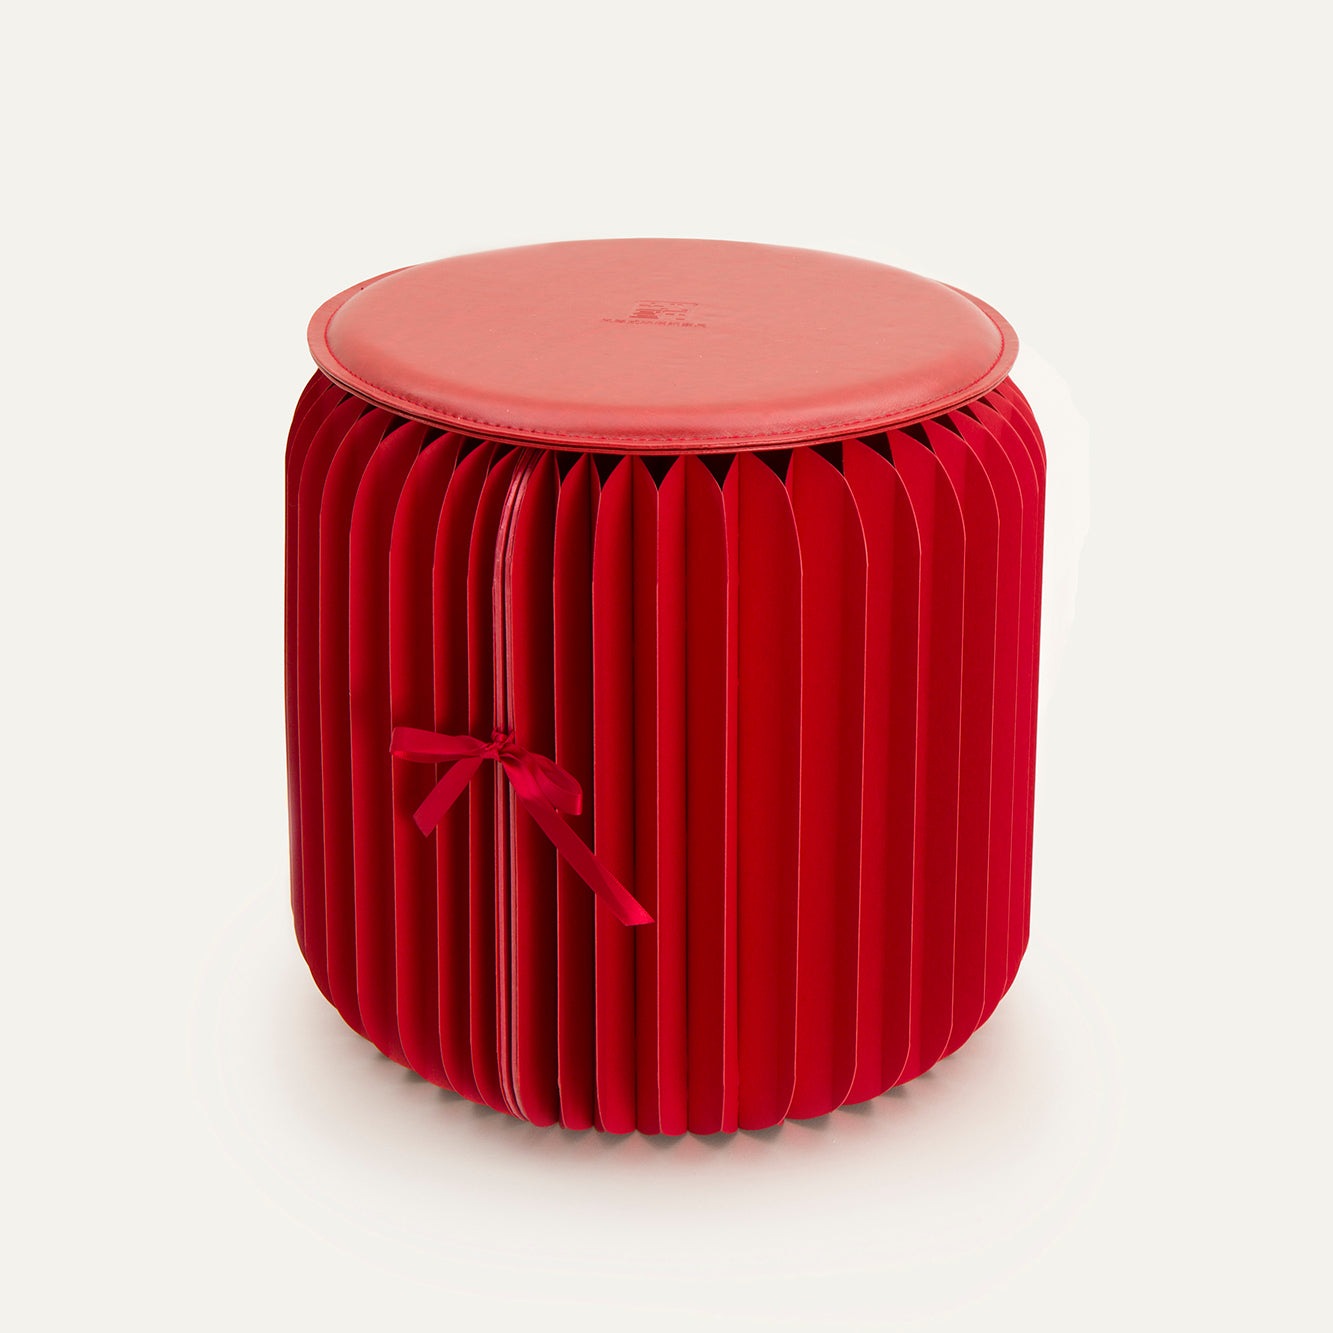 Honeycomb Kraft Paper Foldable Stool: Sustainable Style on the Go